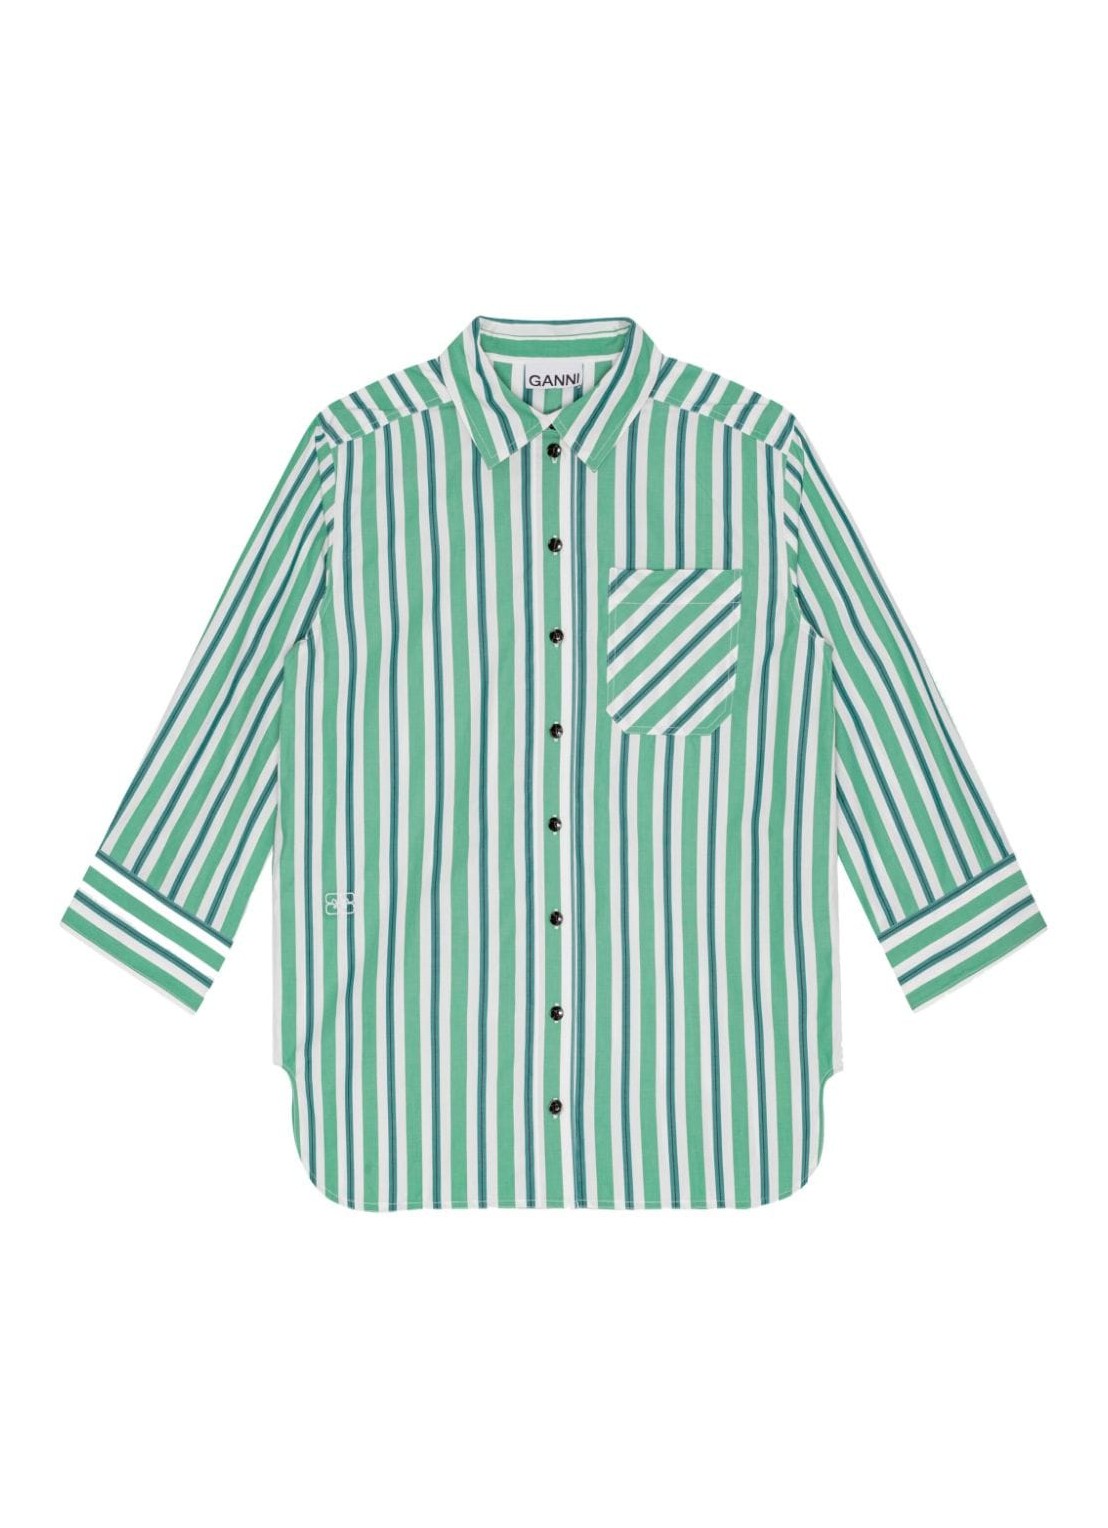 Camiseria ganni shirt woman stripe cotton shirt f9022 879 talla 38
 